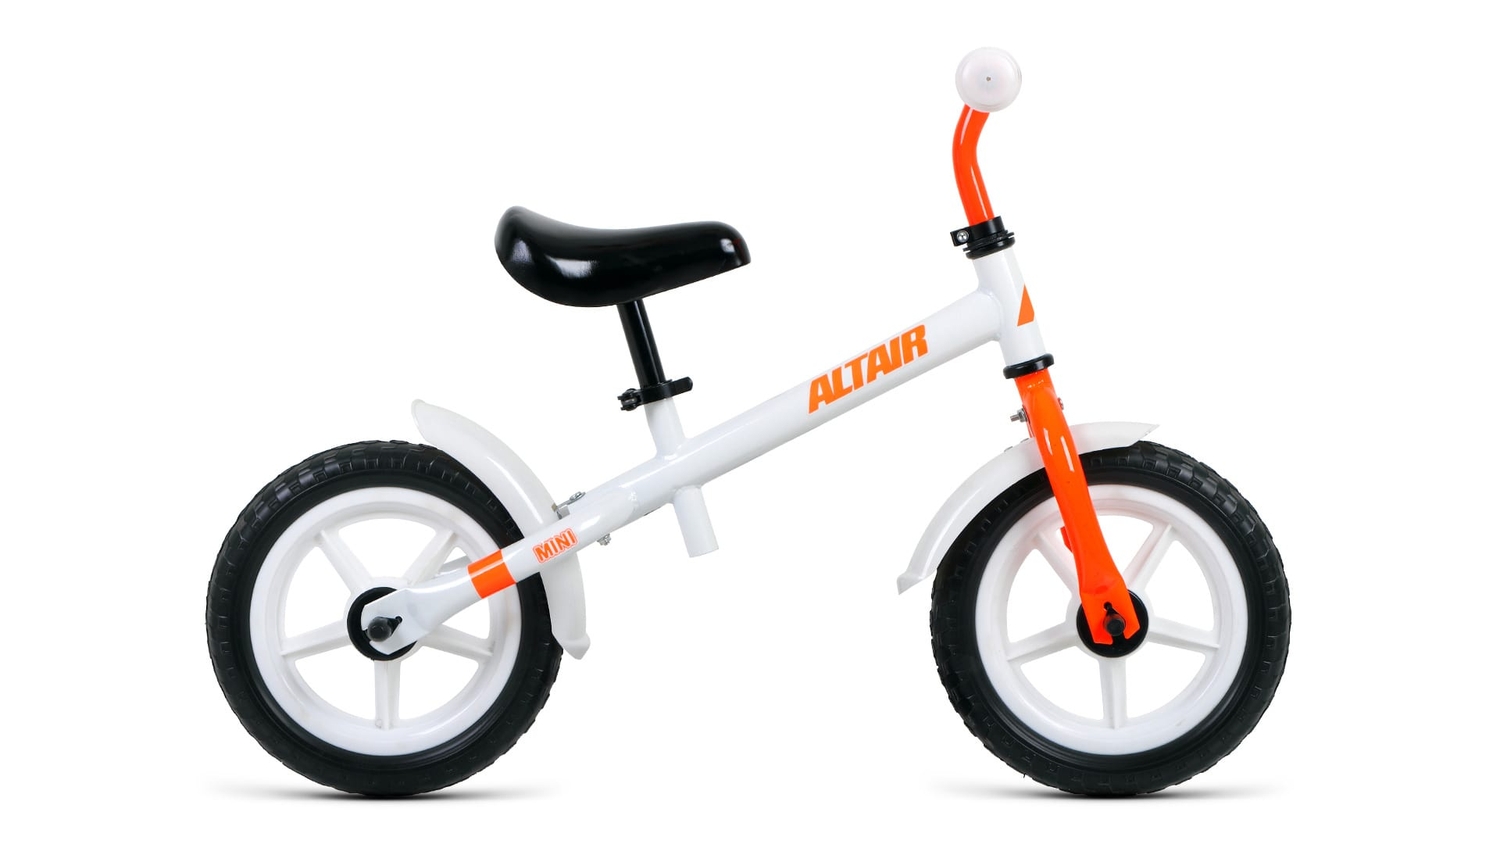 Беговел Altair Mini 12 2021 Белый/оранжевый 1BKT1R1AX007 женский велосипед bear bike marrakesh год 2021 оранжевый ростовка 17 5